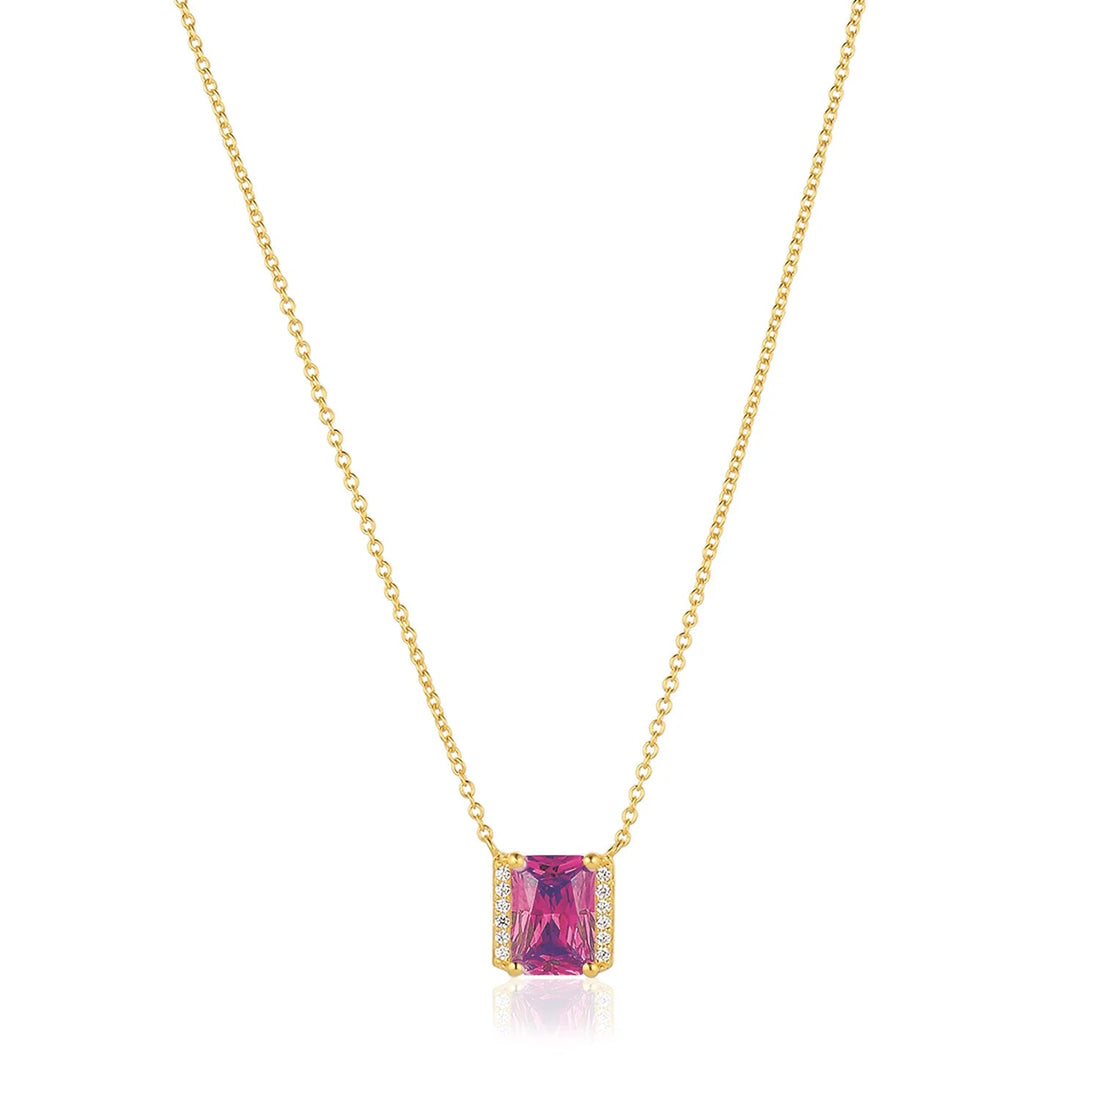  Sif Jakobs Jewellery - Halskette Roccanova X-Grande vergoldet mit pinkem und weissen Zirkonia - Beautiful Joy